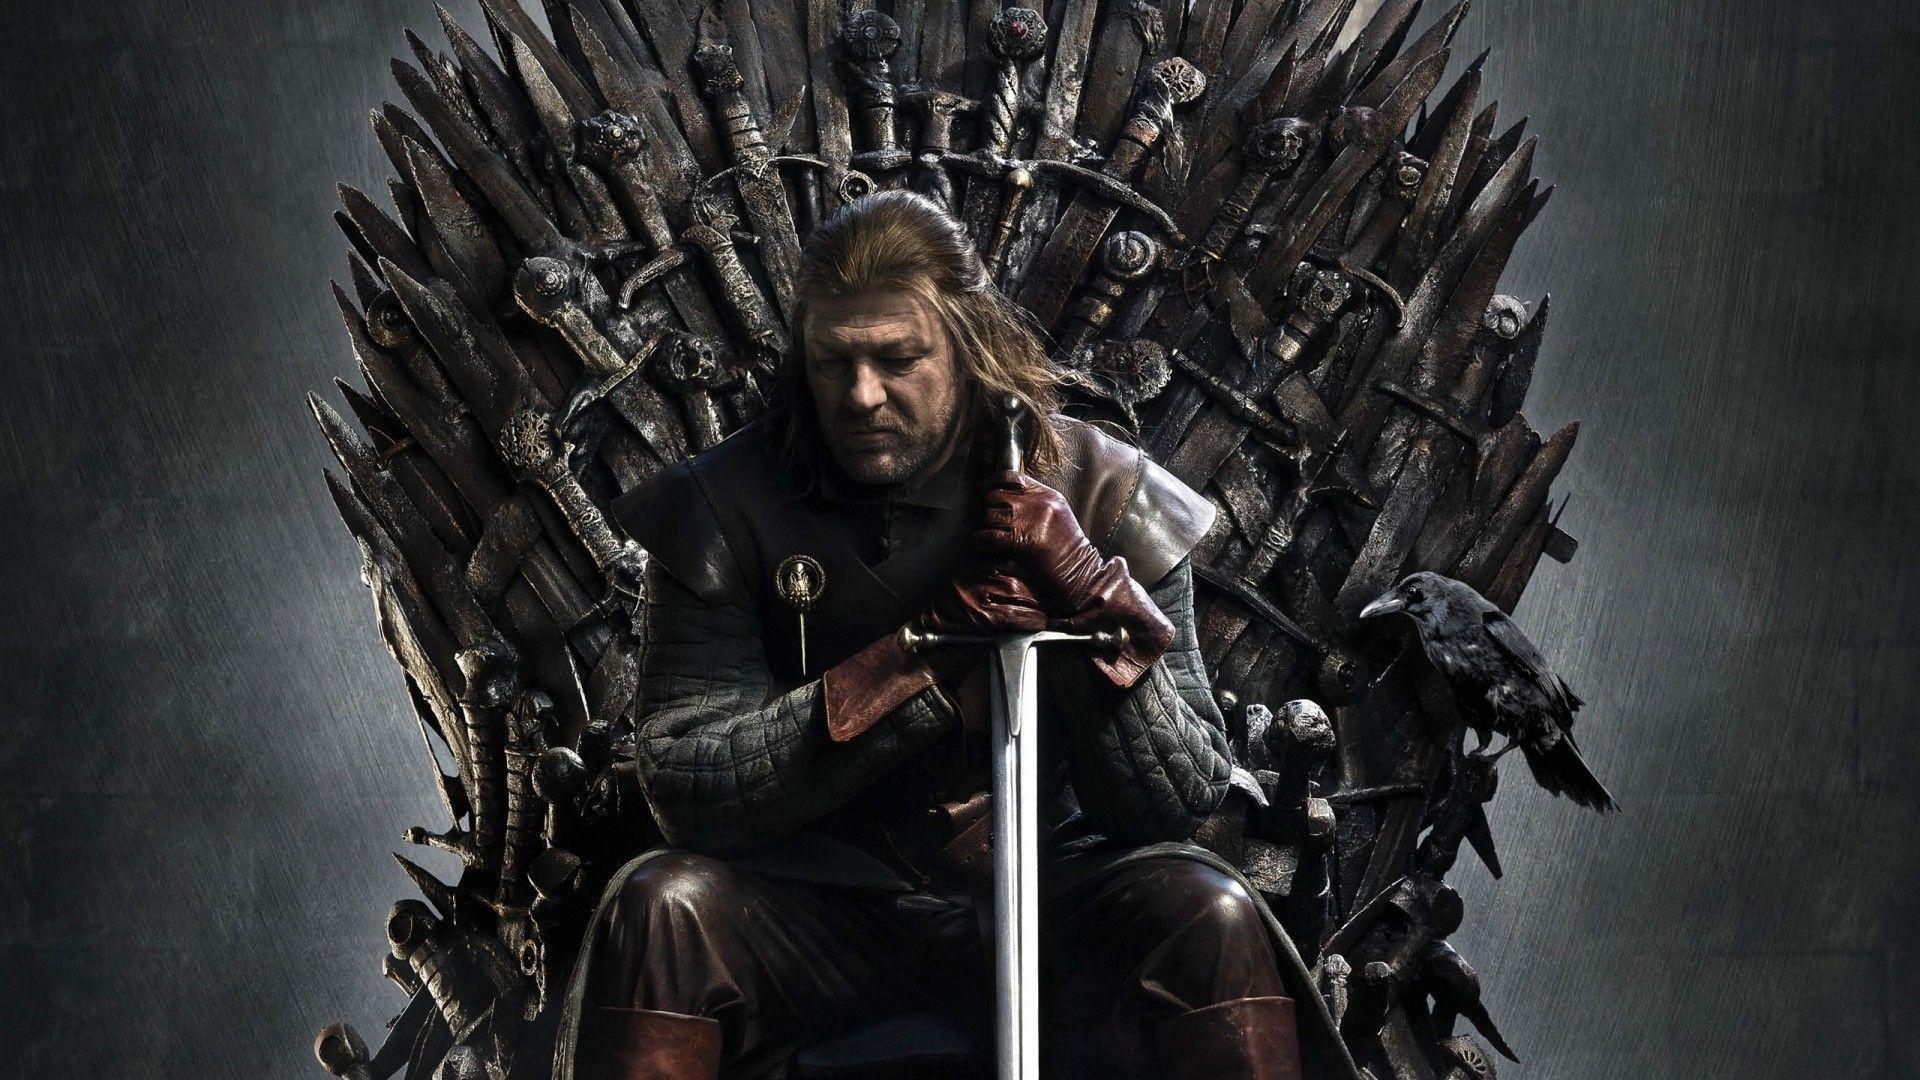 Game of Thrones Stark on the iron throne